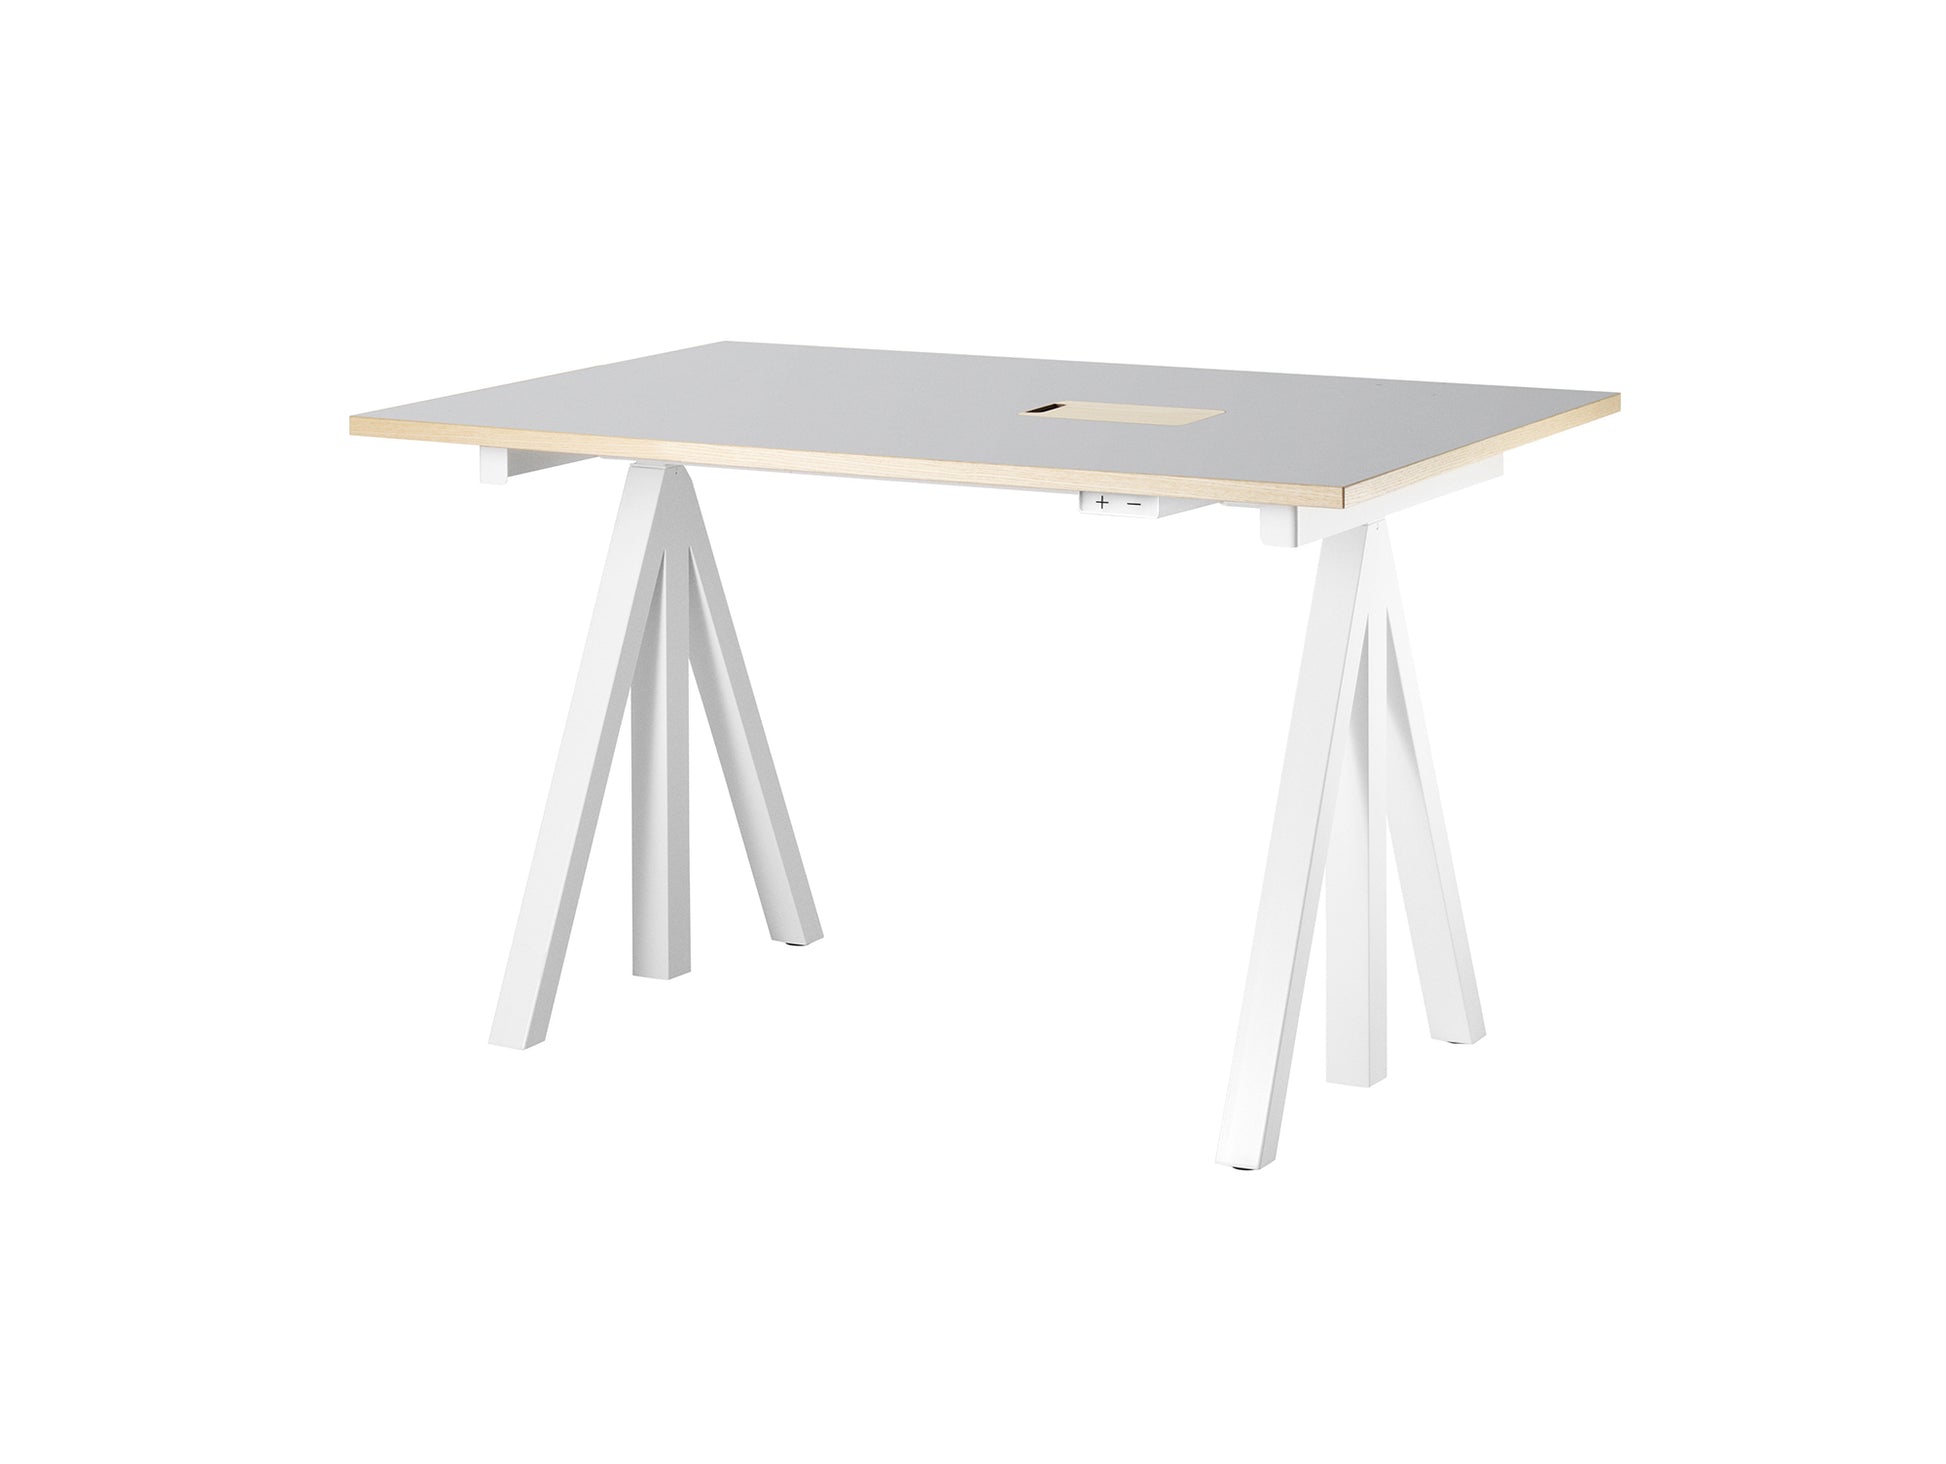 Height Adjustable Work Desk by String - 120 x 78 cm / White Steel Base / Light Grey Linoleum MDF Desktop